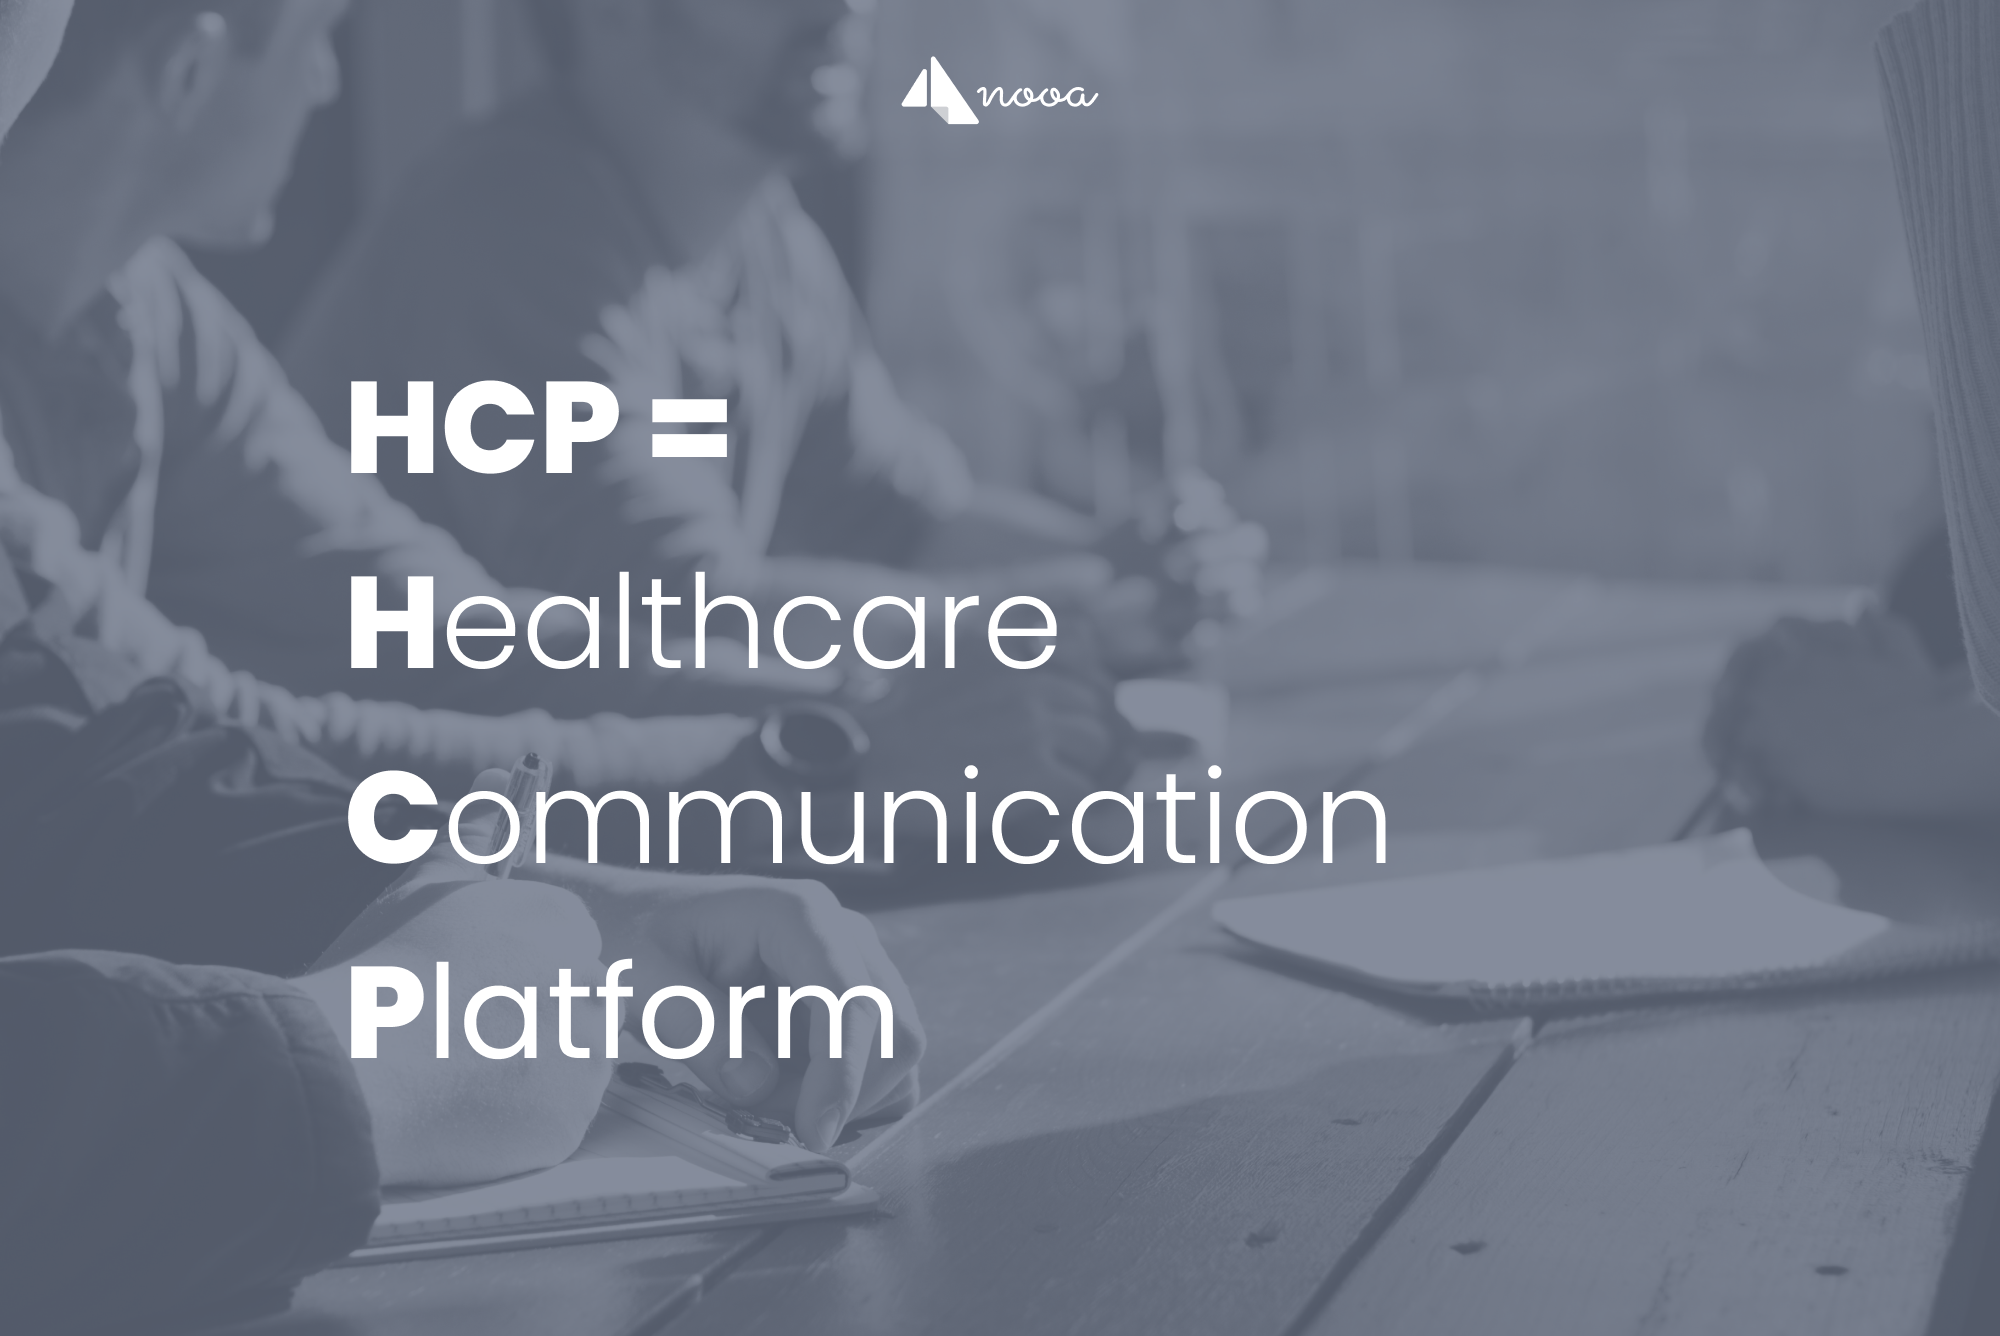 Healthcare communication platform